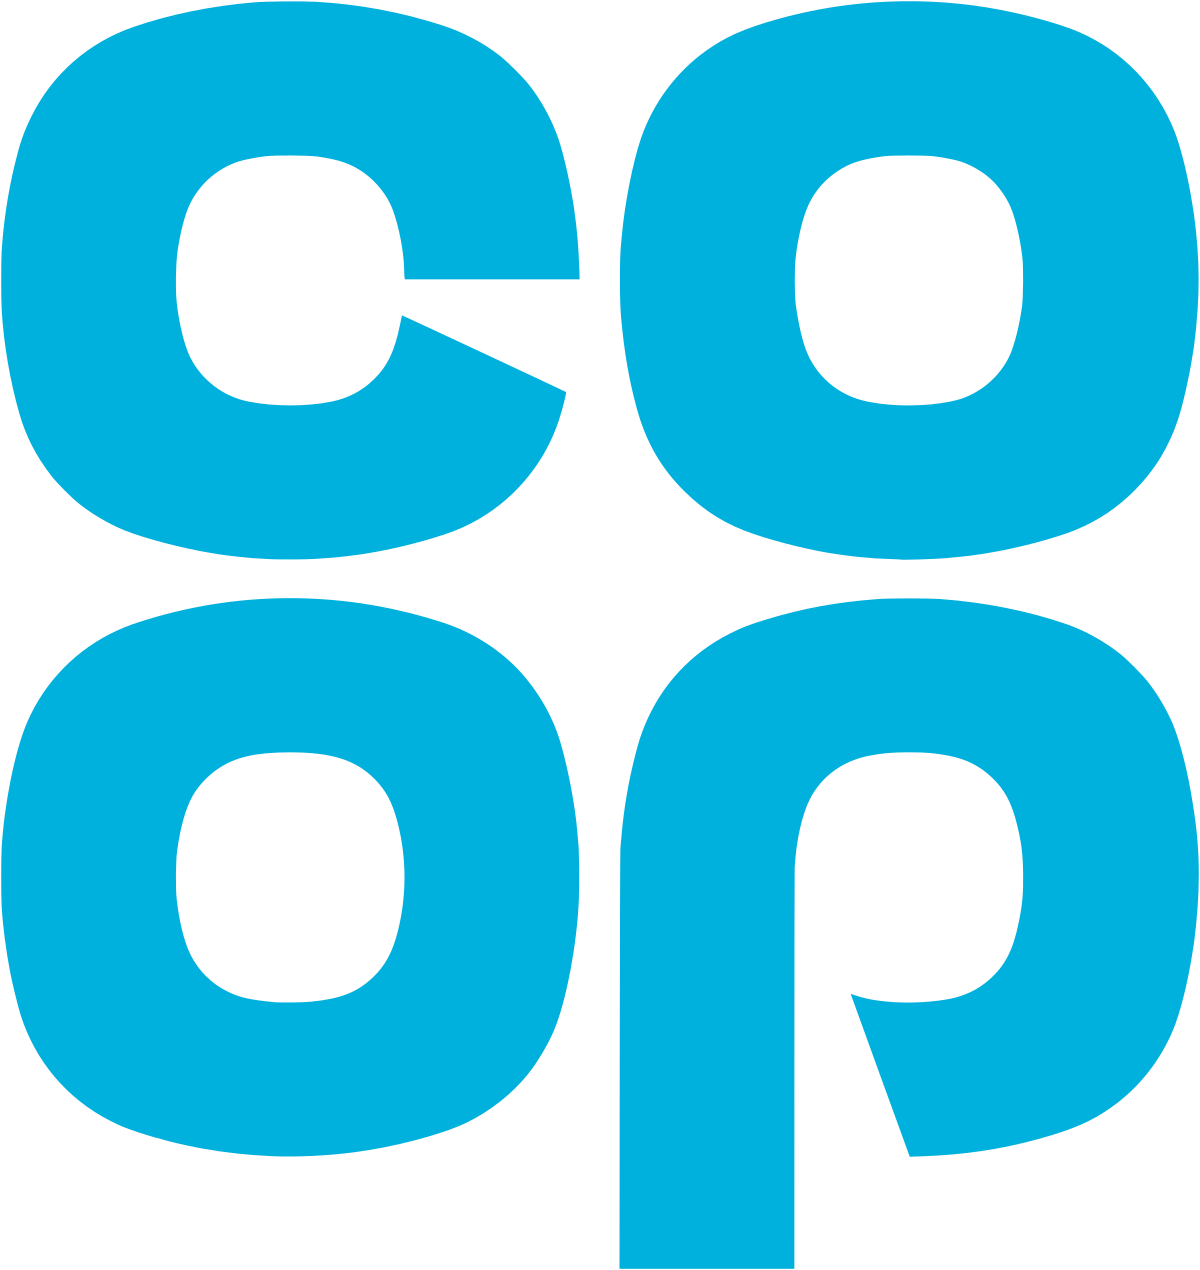 Cooperative Logo - The Co-operative brand